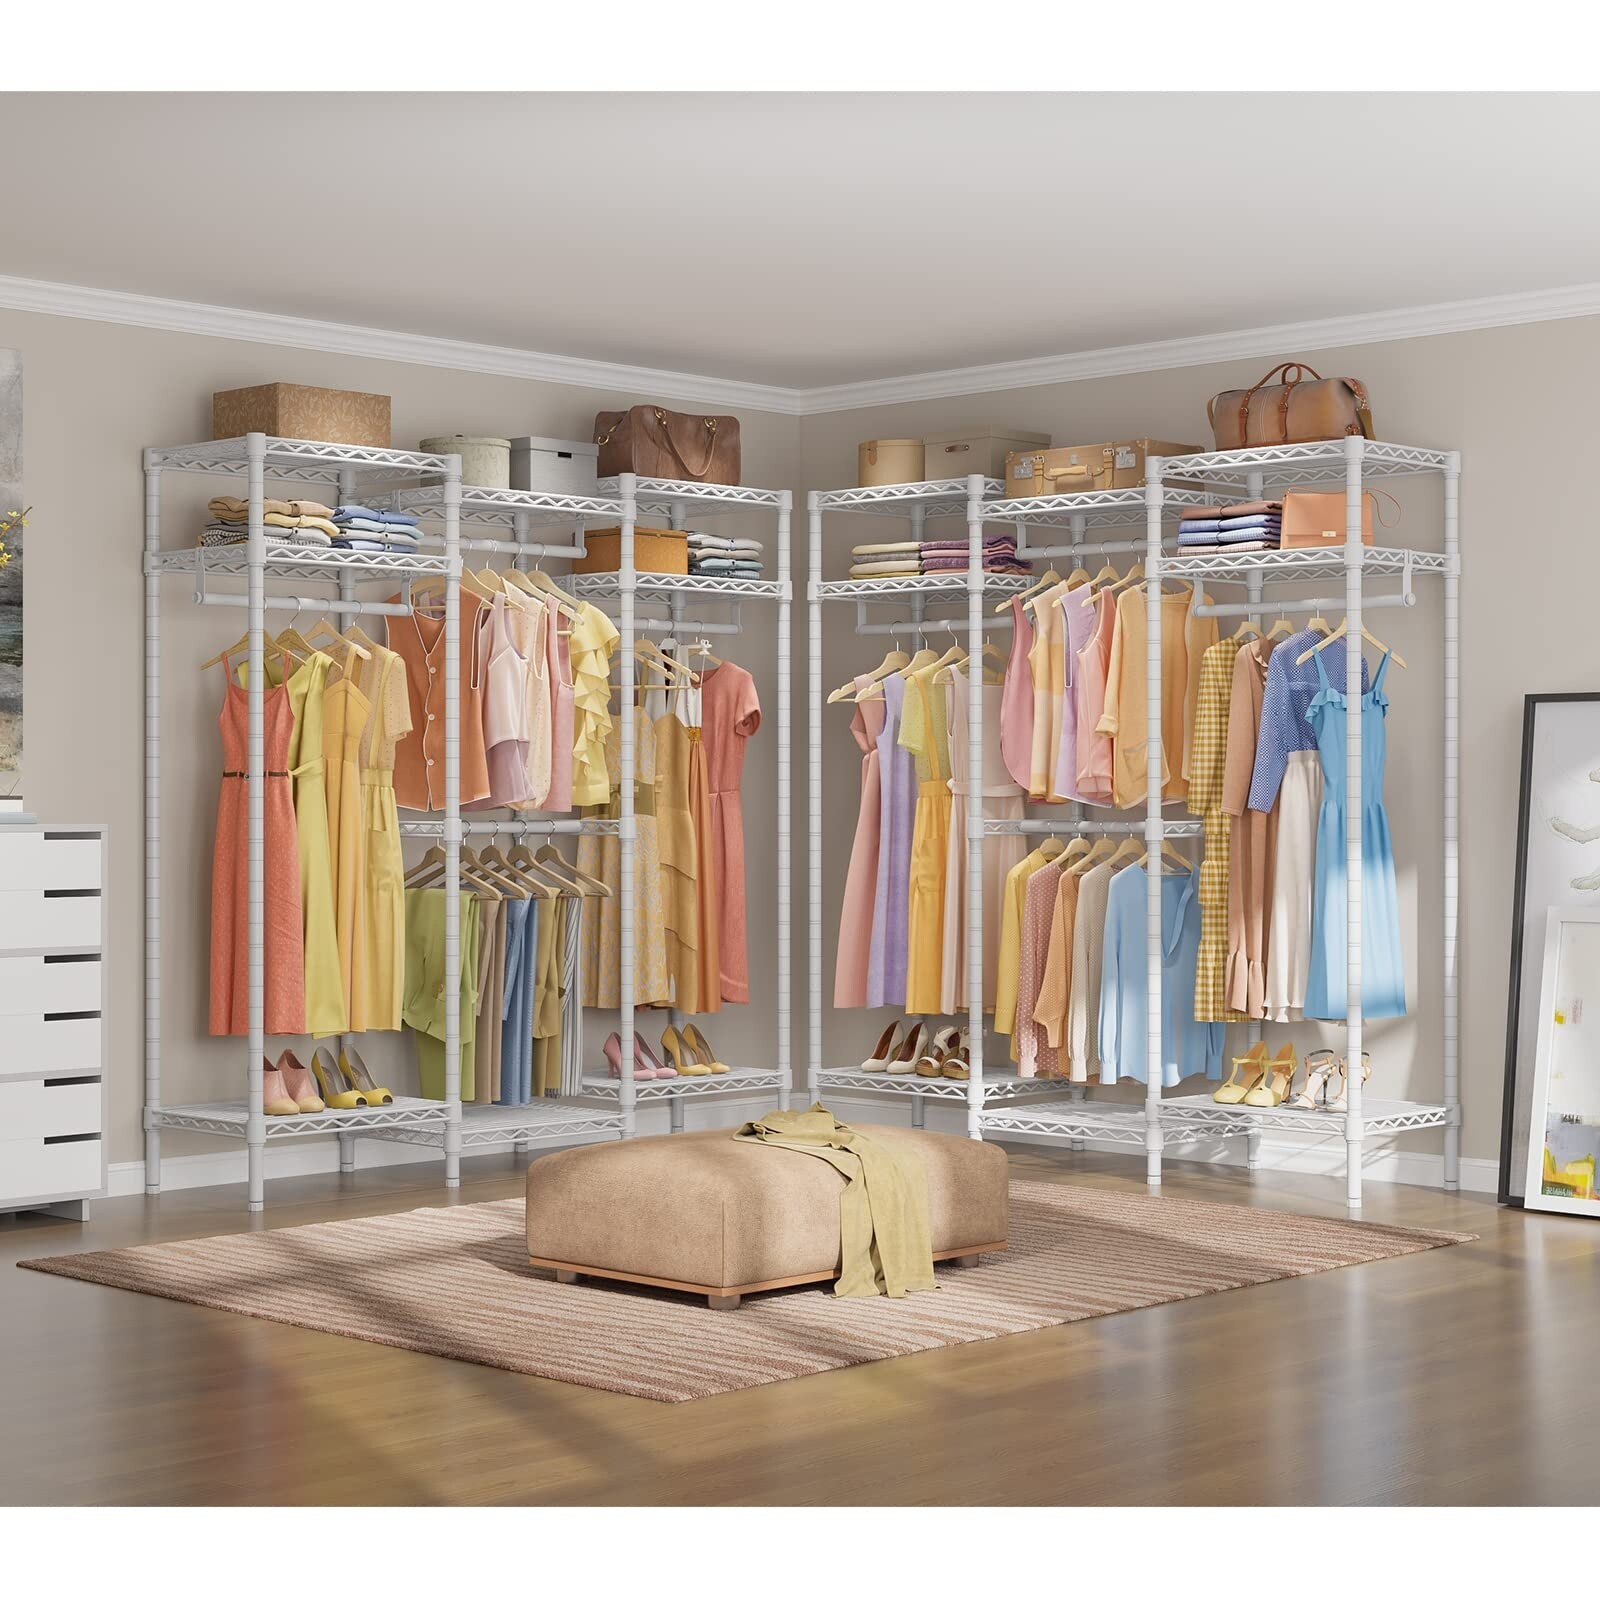 https://ak1.ostkcdn.com/images/products/is/images/direct/922d33cf28e8740700a7bb46b0d28c7ab18055df/Garment-Rack-Bedroom-Freestanding-Closet-Organizer%2C-Wardrobe-Closet-Heavy-Duty-Clothing-Rack-with-Adjustable-Shelves-%26-Hang-Rods.jpg